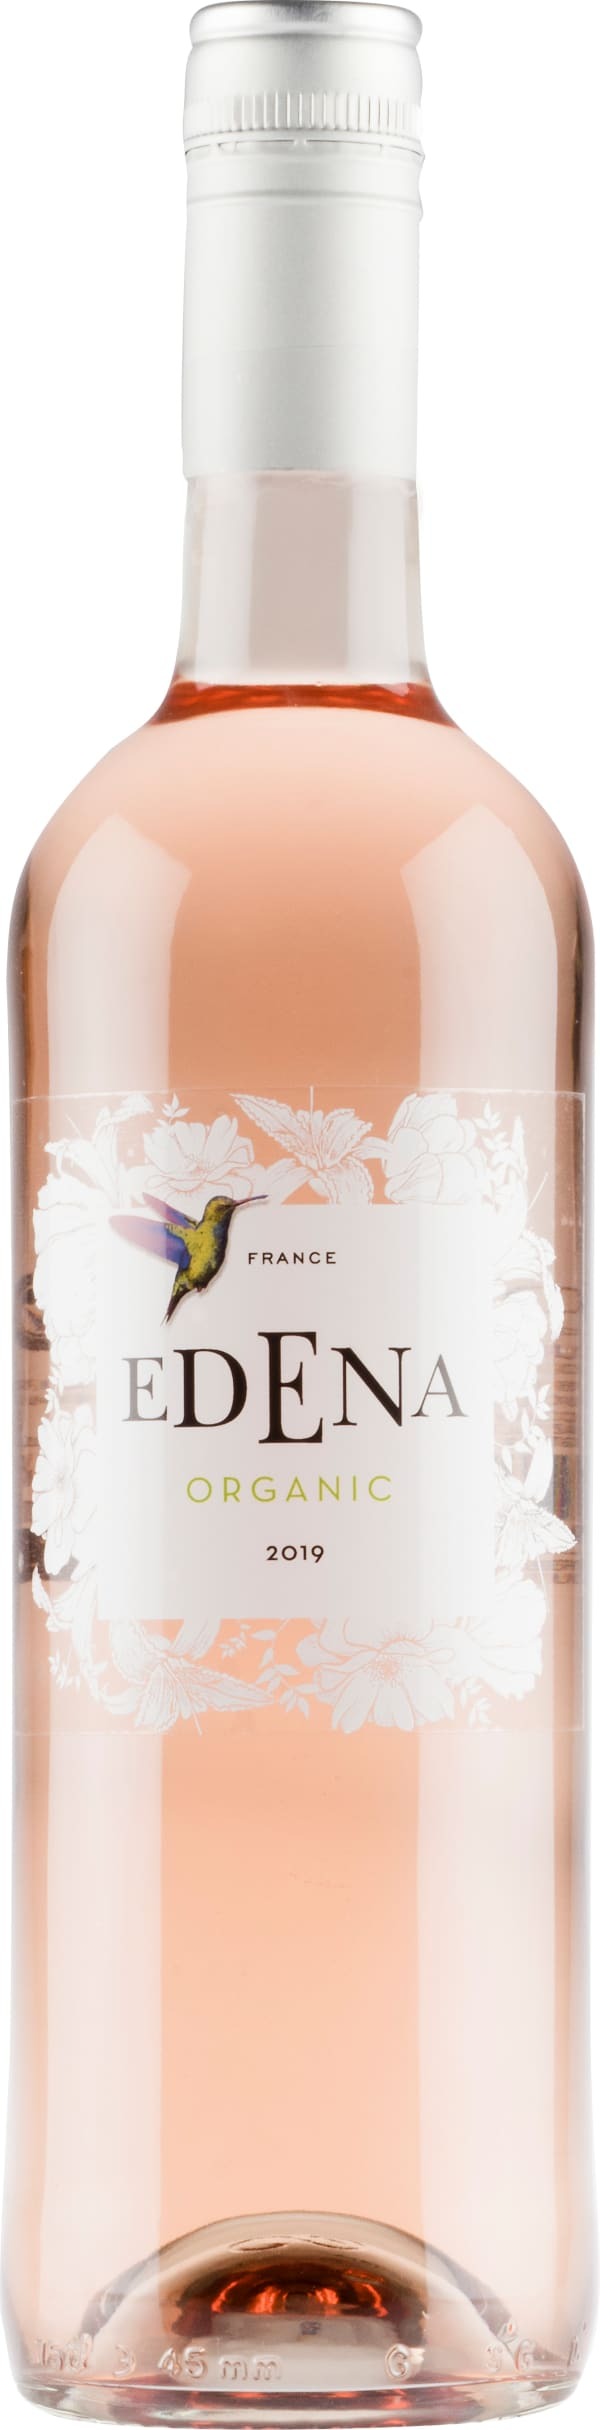 Edena Organic Rosé 2019